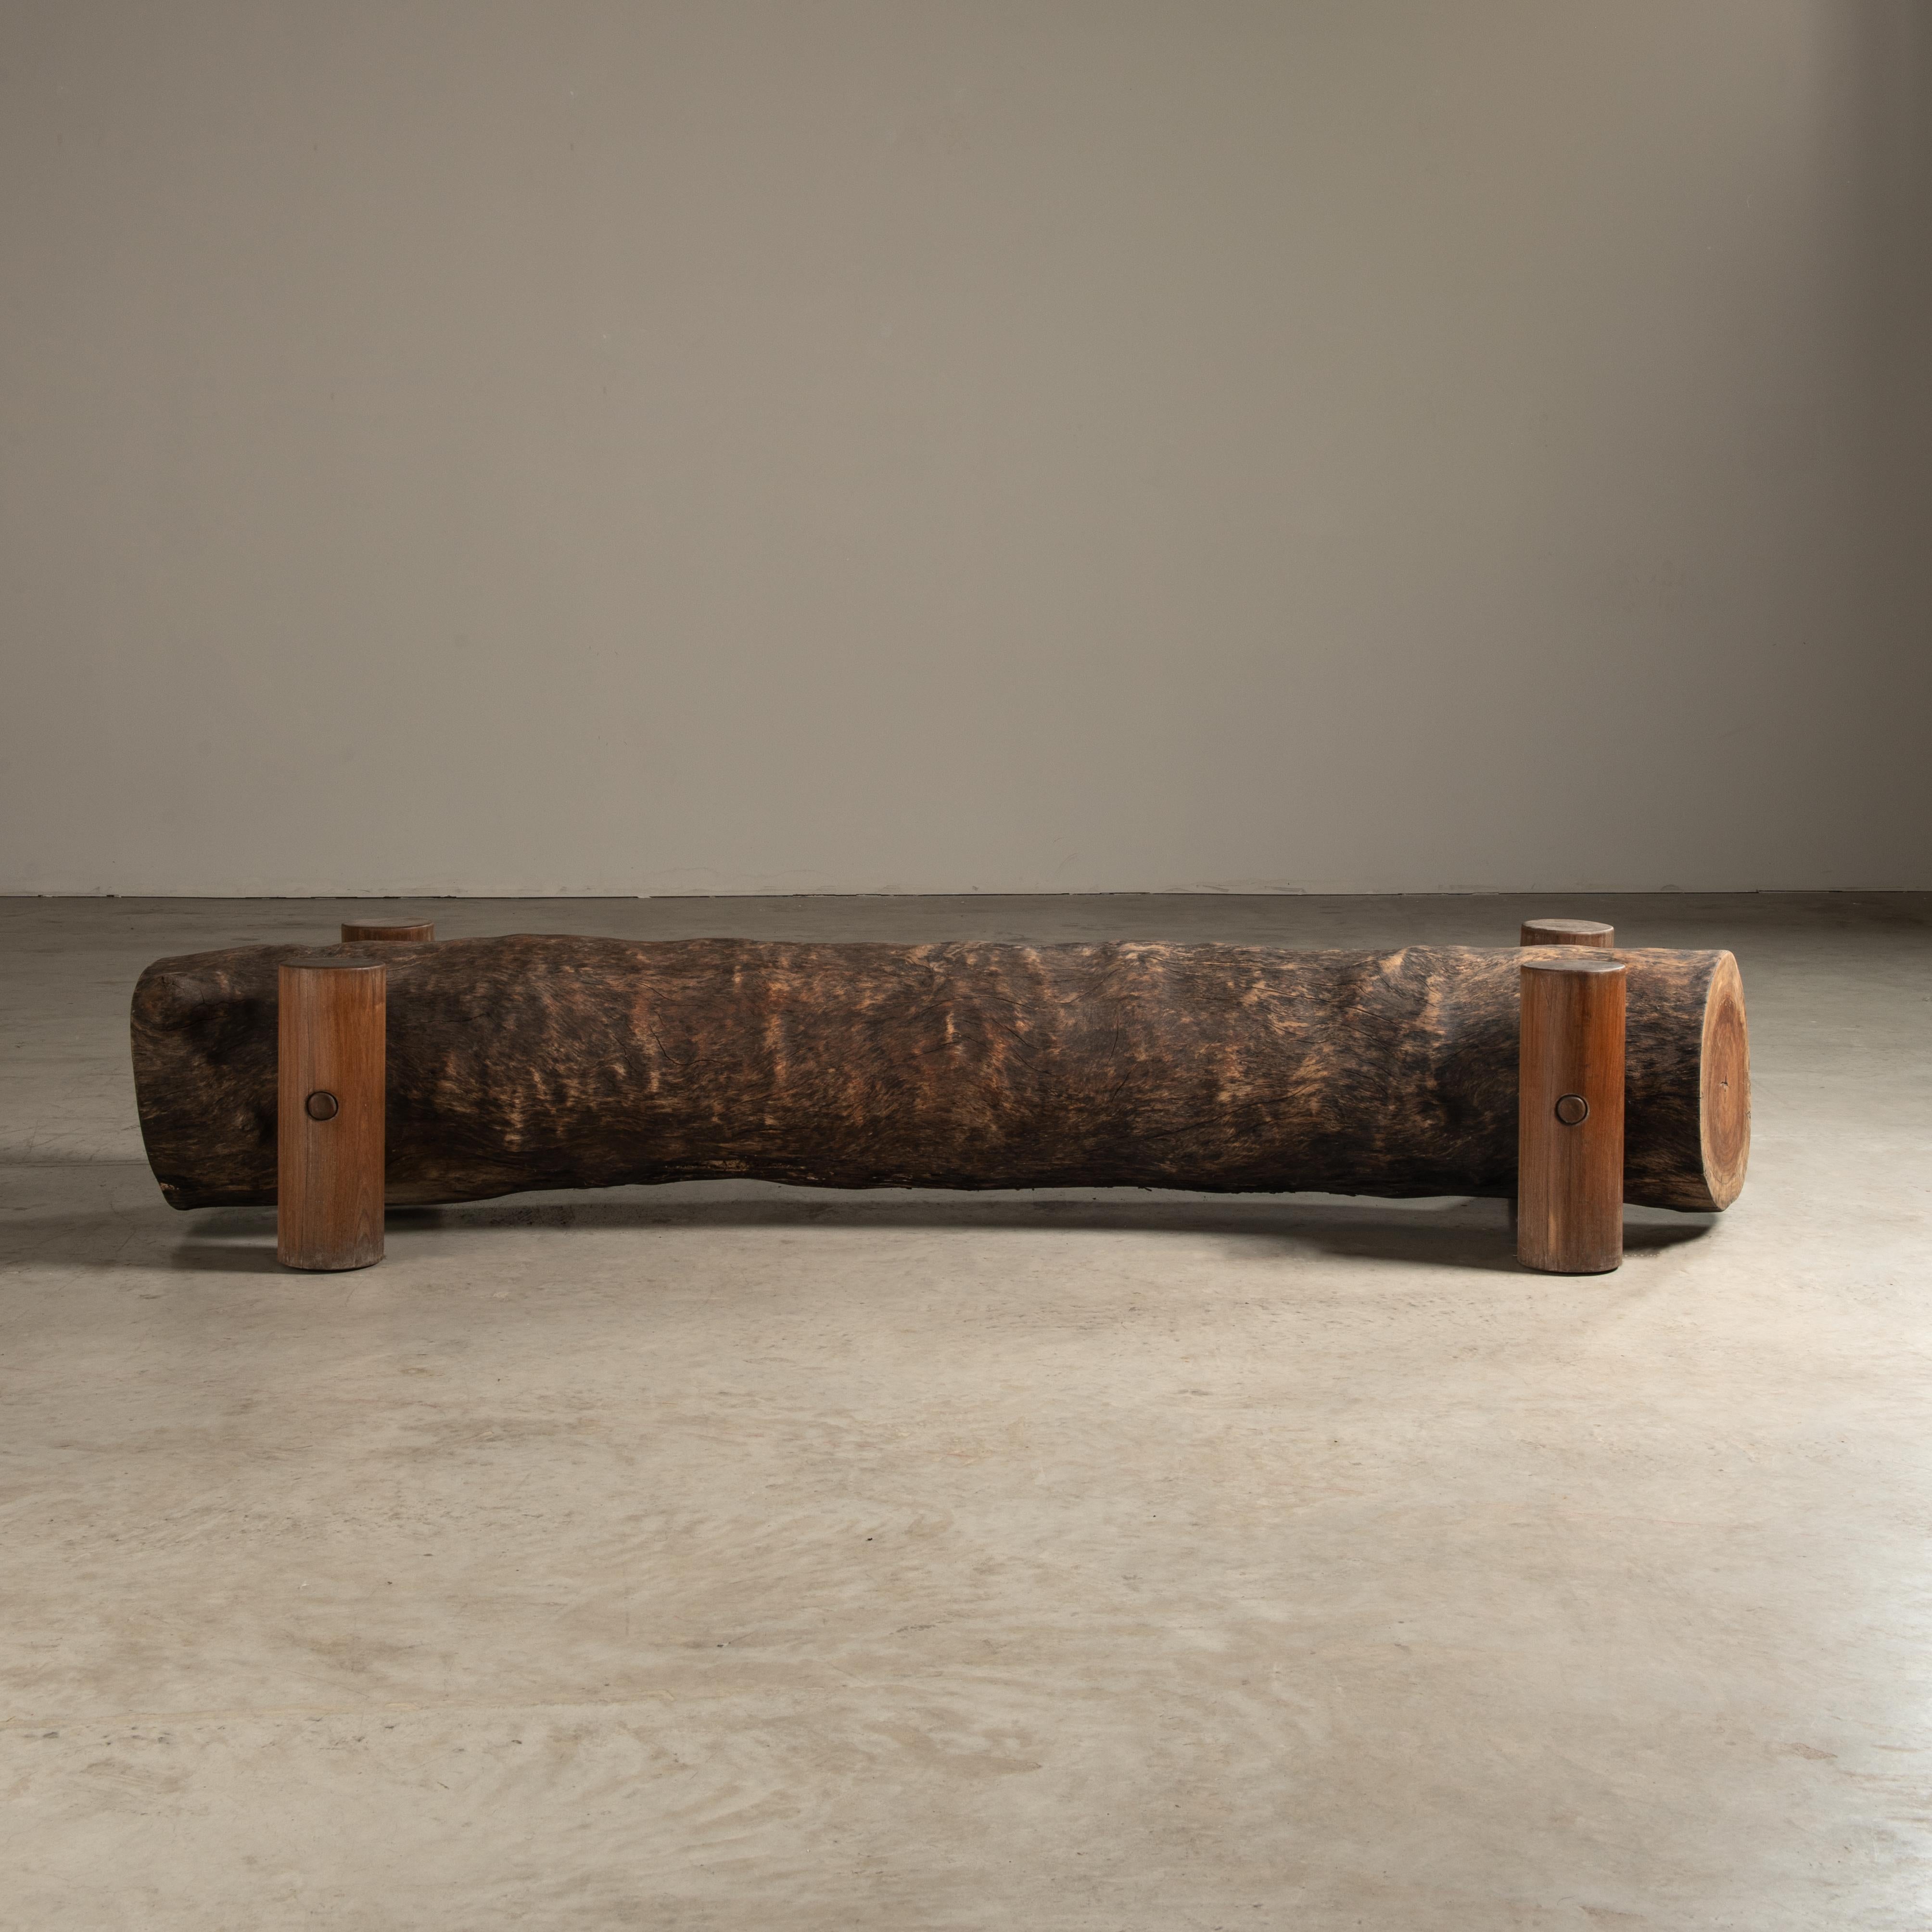 Hardwood 'Tora' Bench in Solid Wood, by Zanini de Zanine, Contemporary Brazilian Design  For Sale